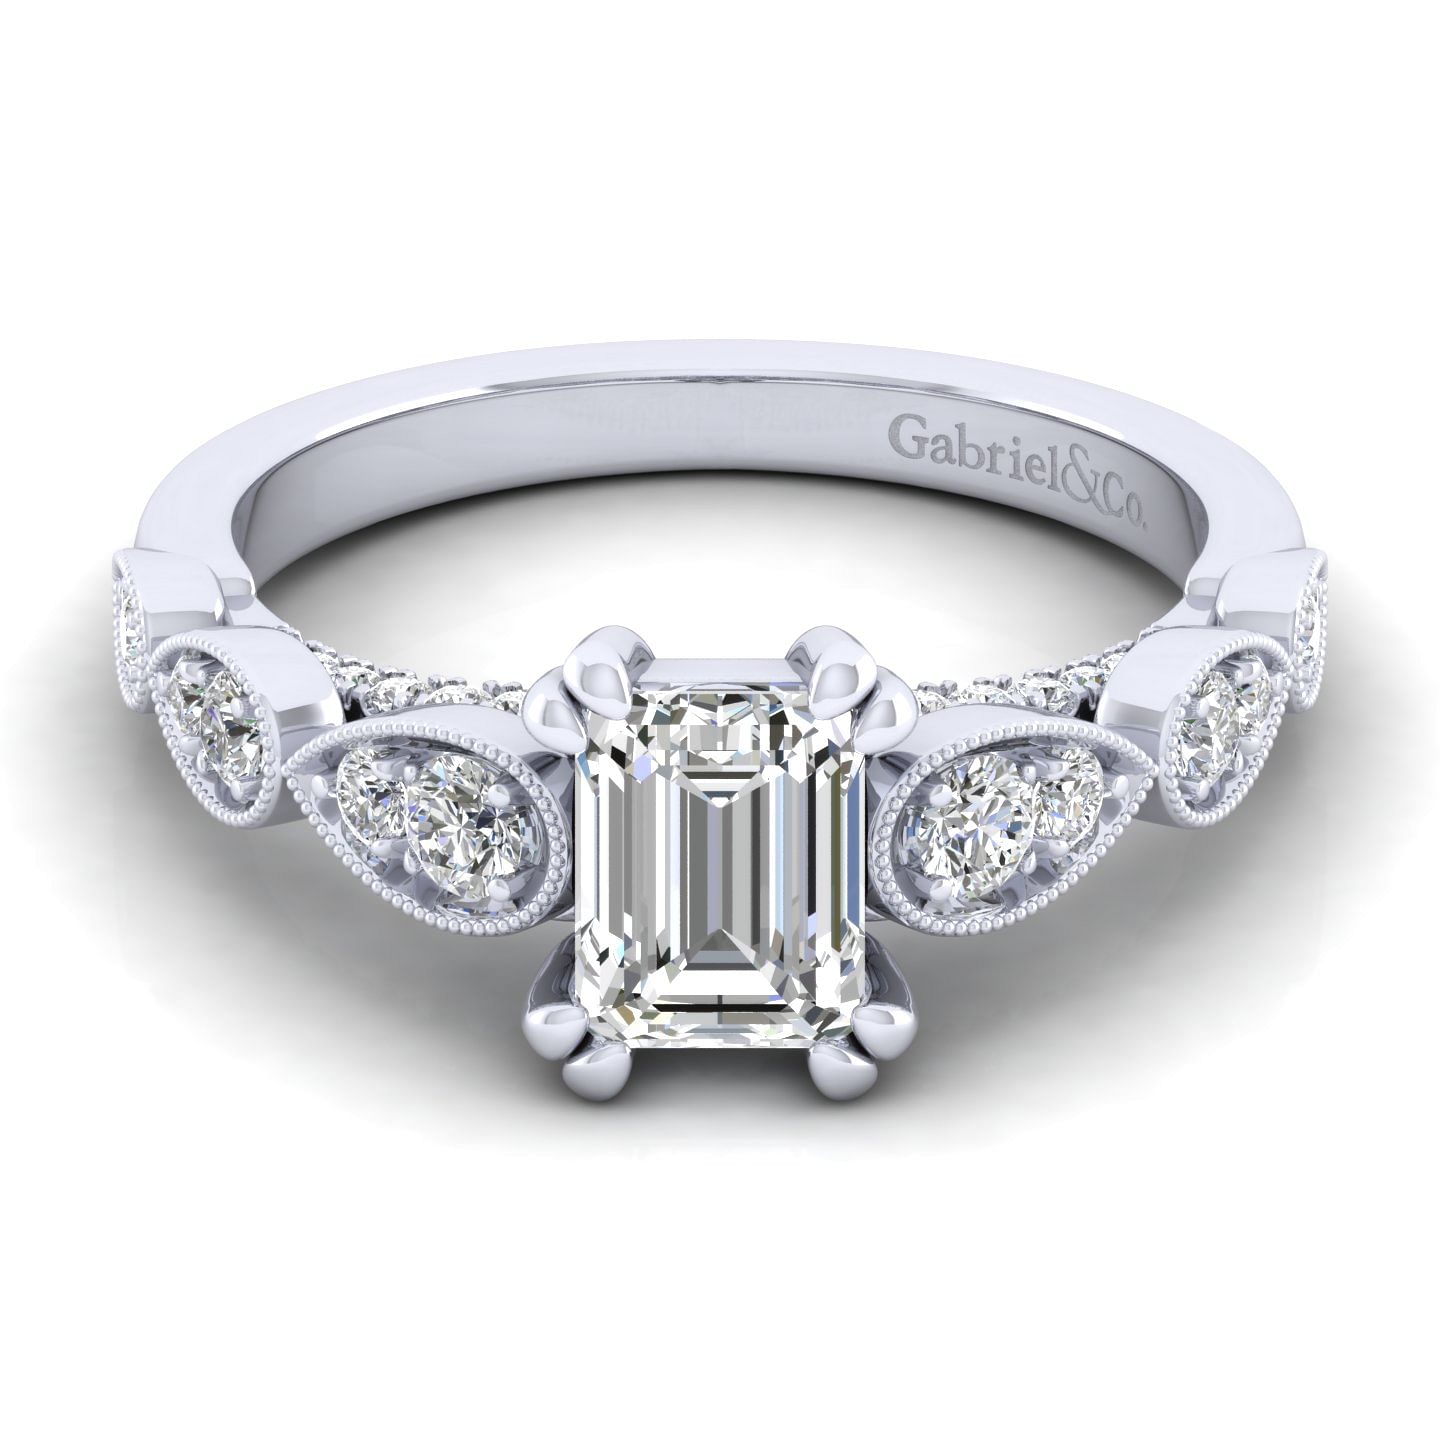 Garland - 14K White Gold Emerald Cut Diamond Engagement Ring